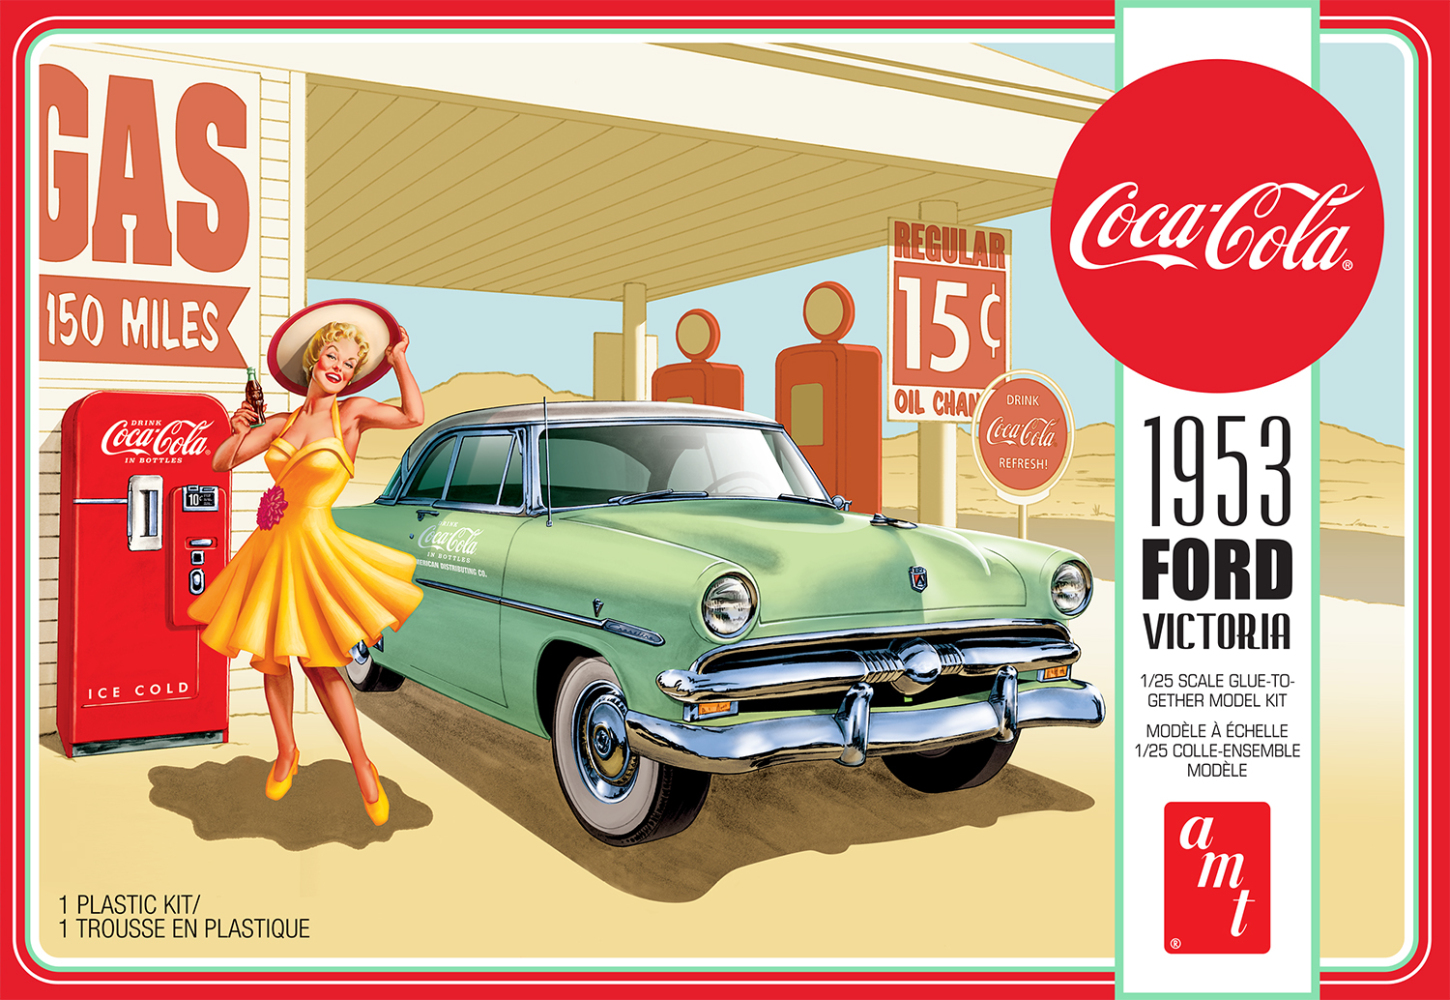 1953 Ford Victoria Hardtop with Coca-Cola Machine